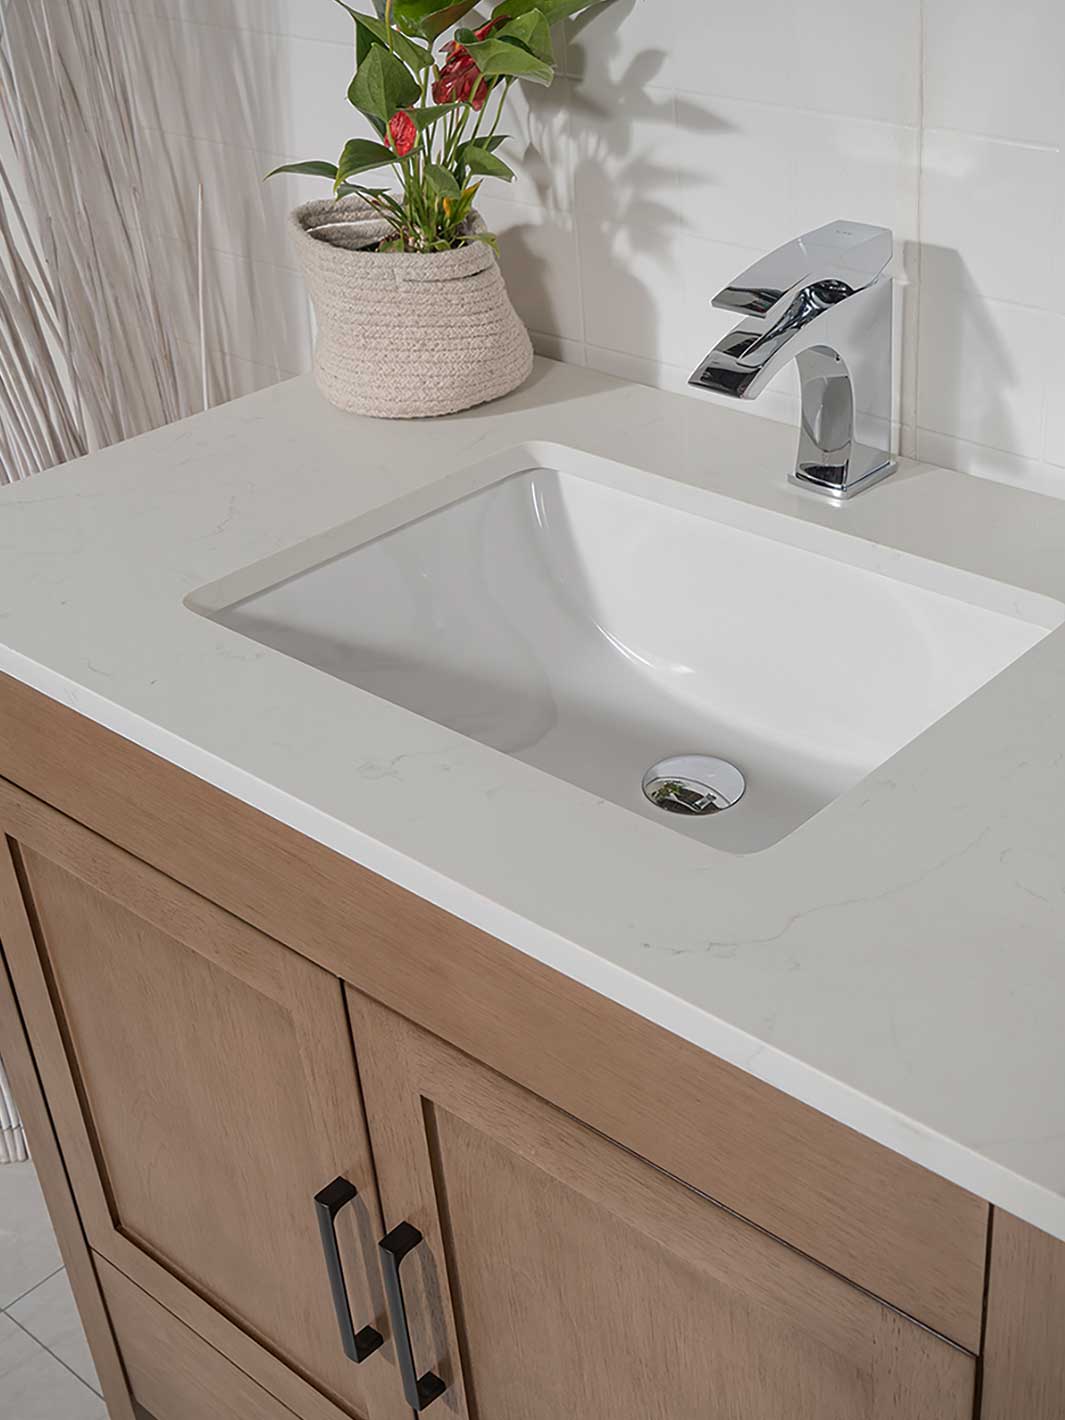 quartz countertop with undermount sink. 